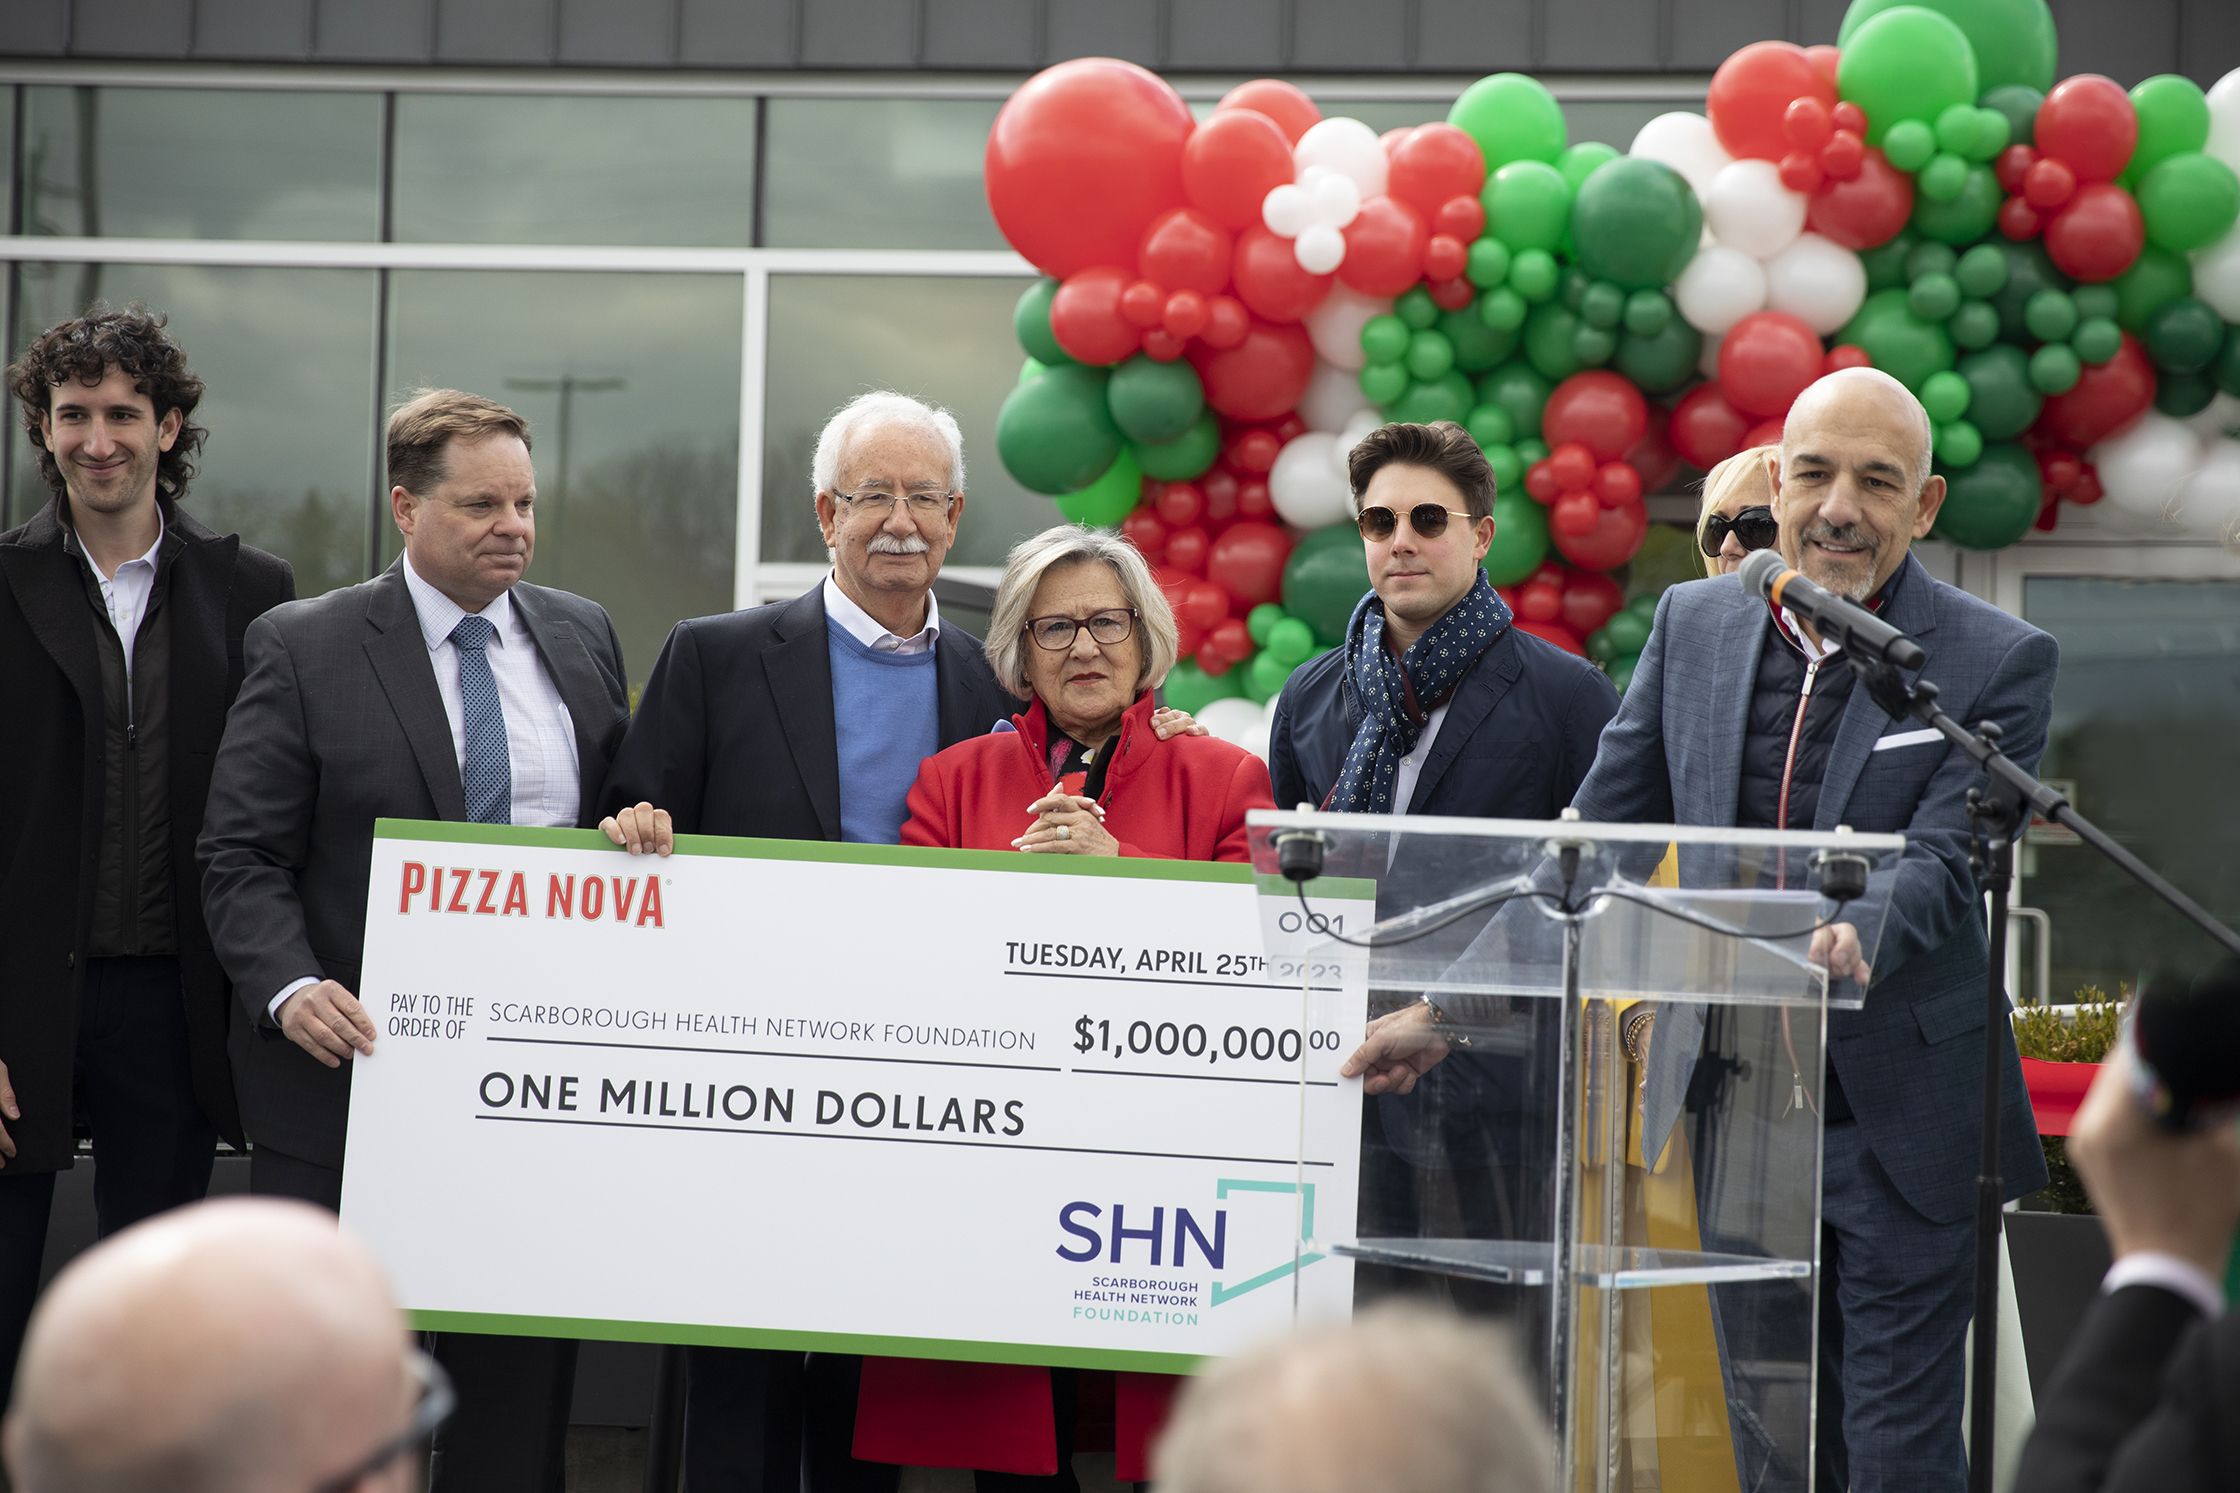 Pizza Nova announces a $1 million dollar donation to Scarborough Health Network (SHN) Foundation